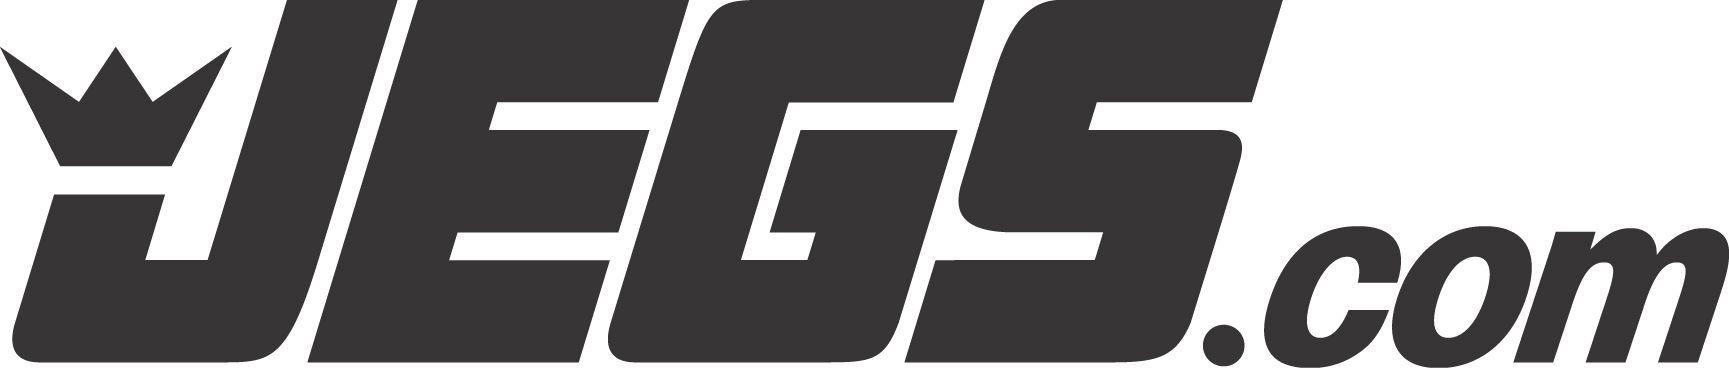 JEGS Logo - Logos & Brand Standards